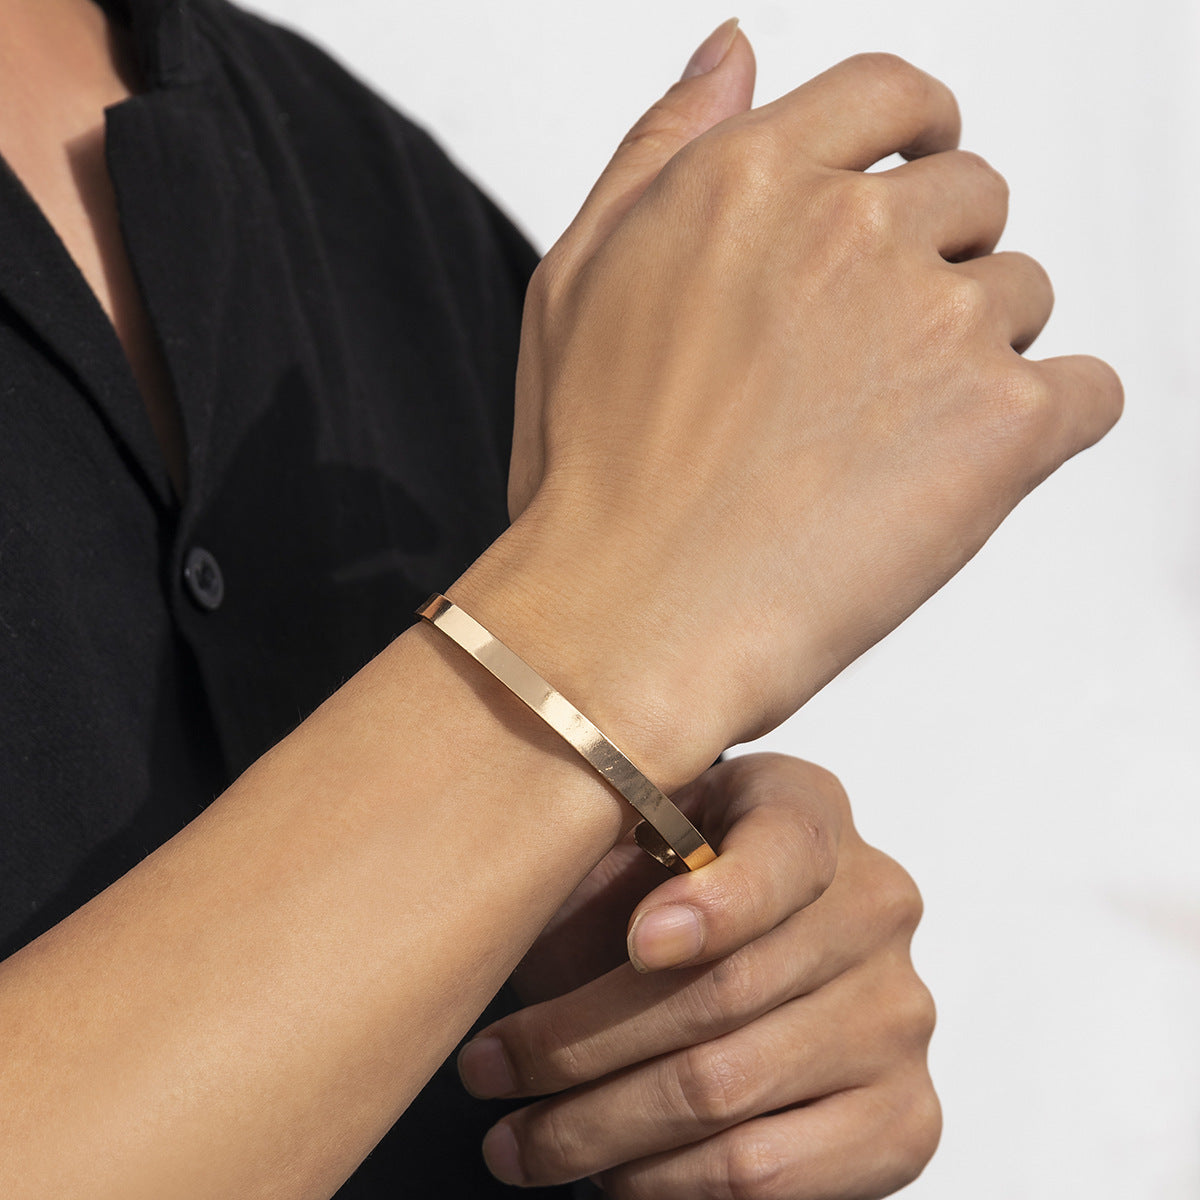 Fashionable and simple C -type opening adjustable bracelet